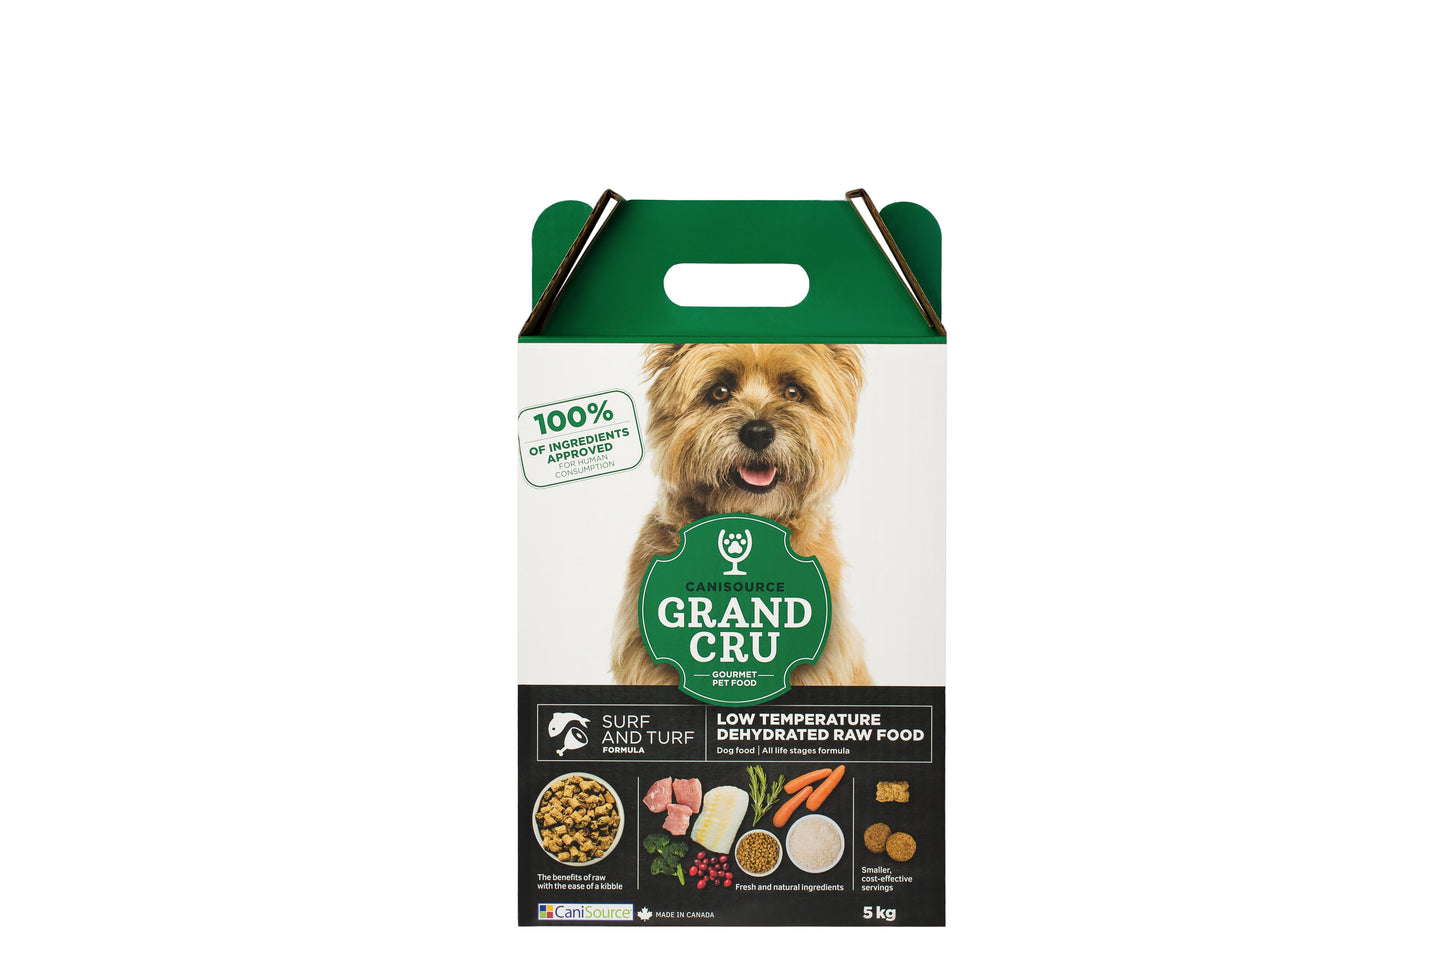 Canisource Grand Cru Dehydrated Dog Food